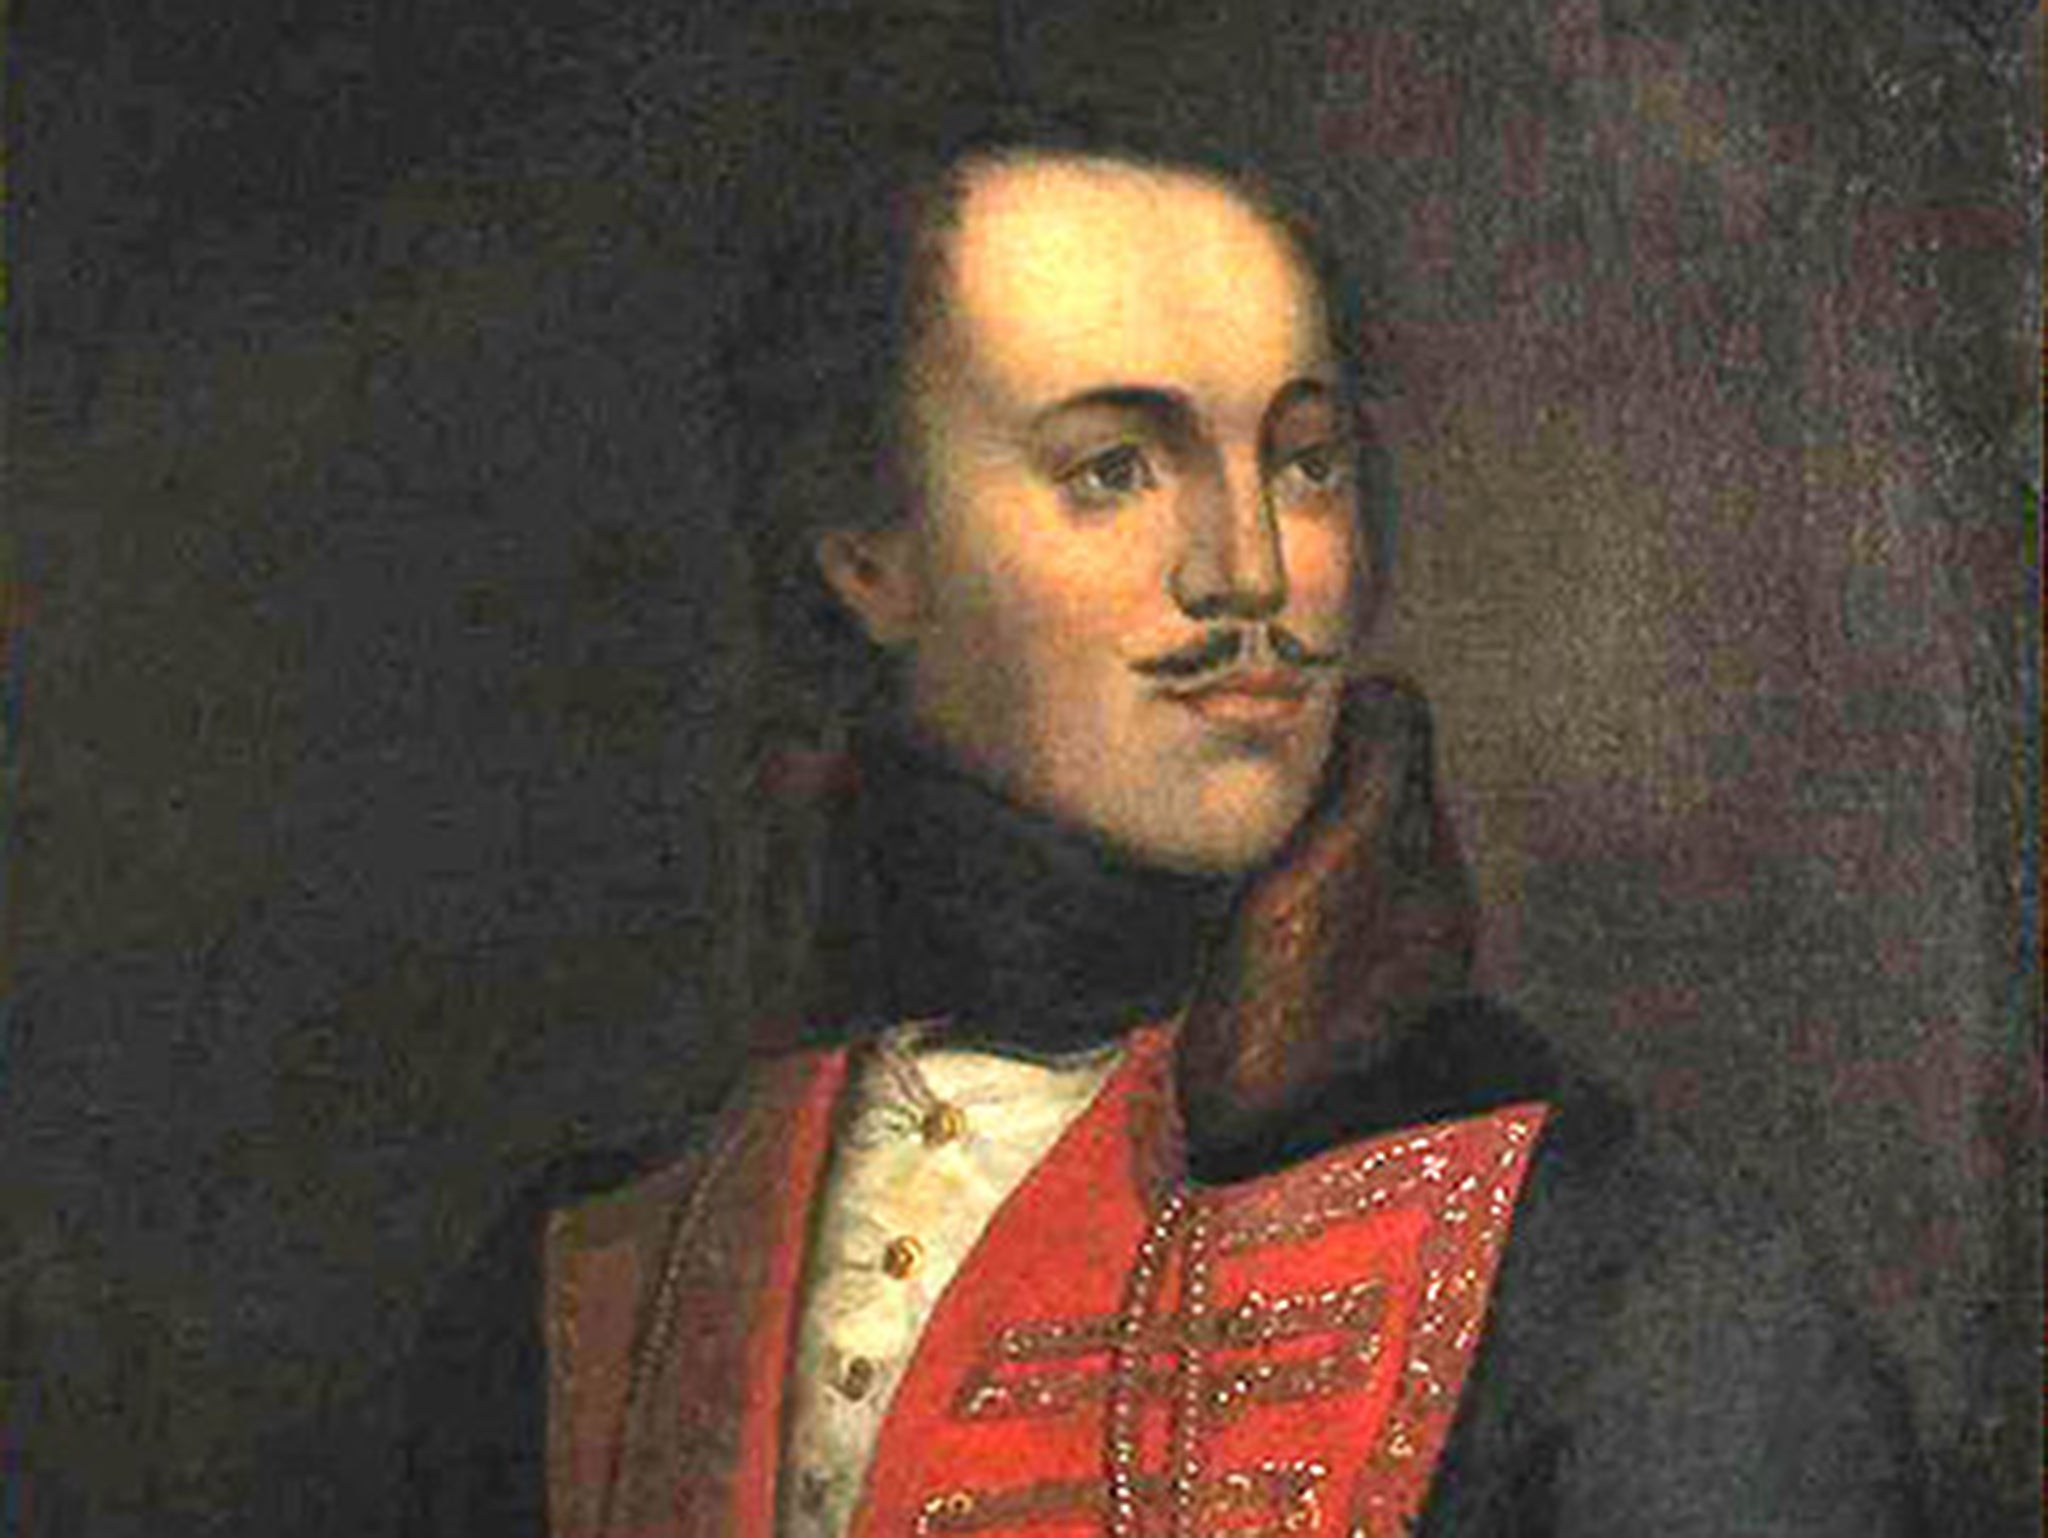 Casimir Pulaski served in George Washington’s army in 1777 battle against the British